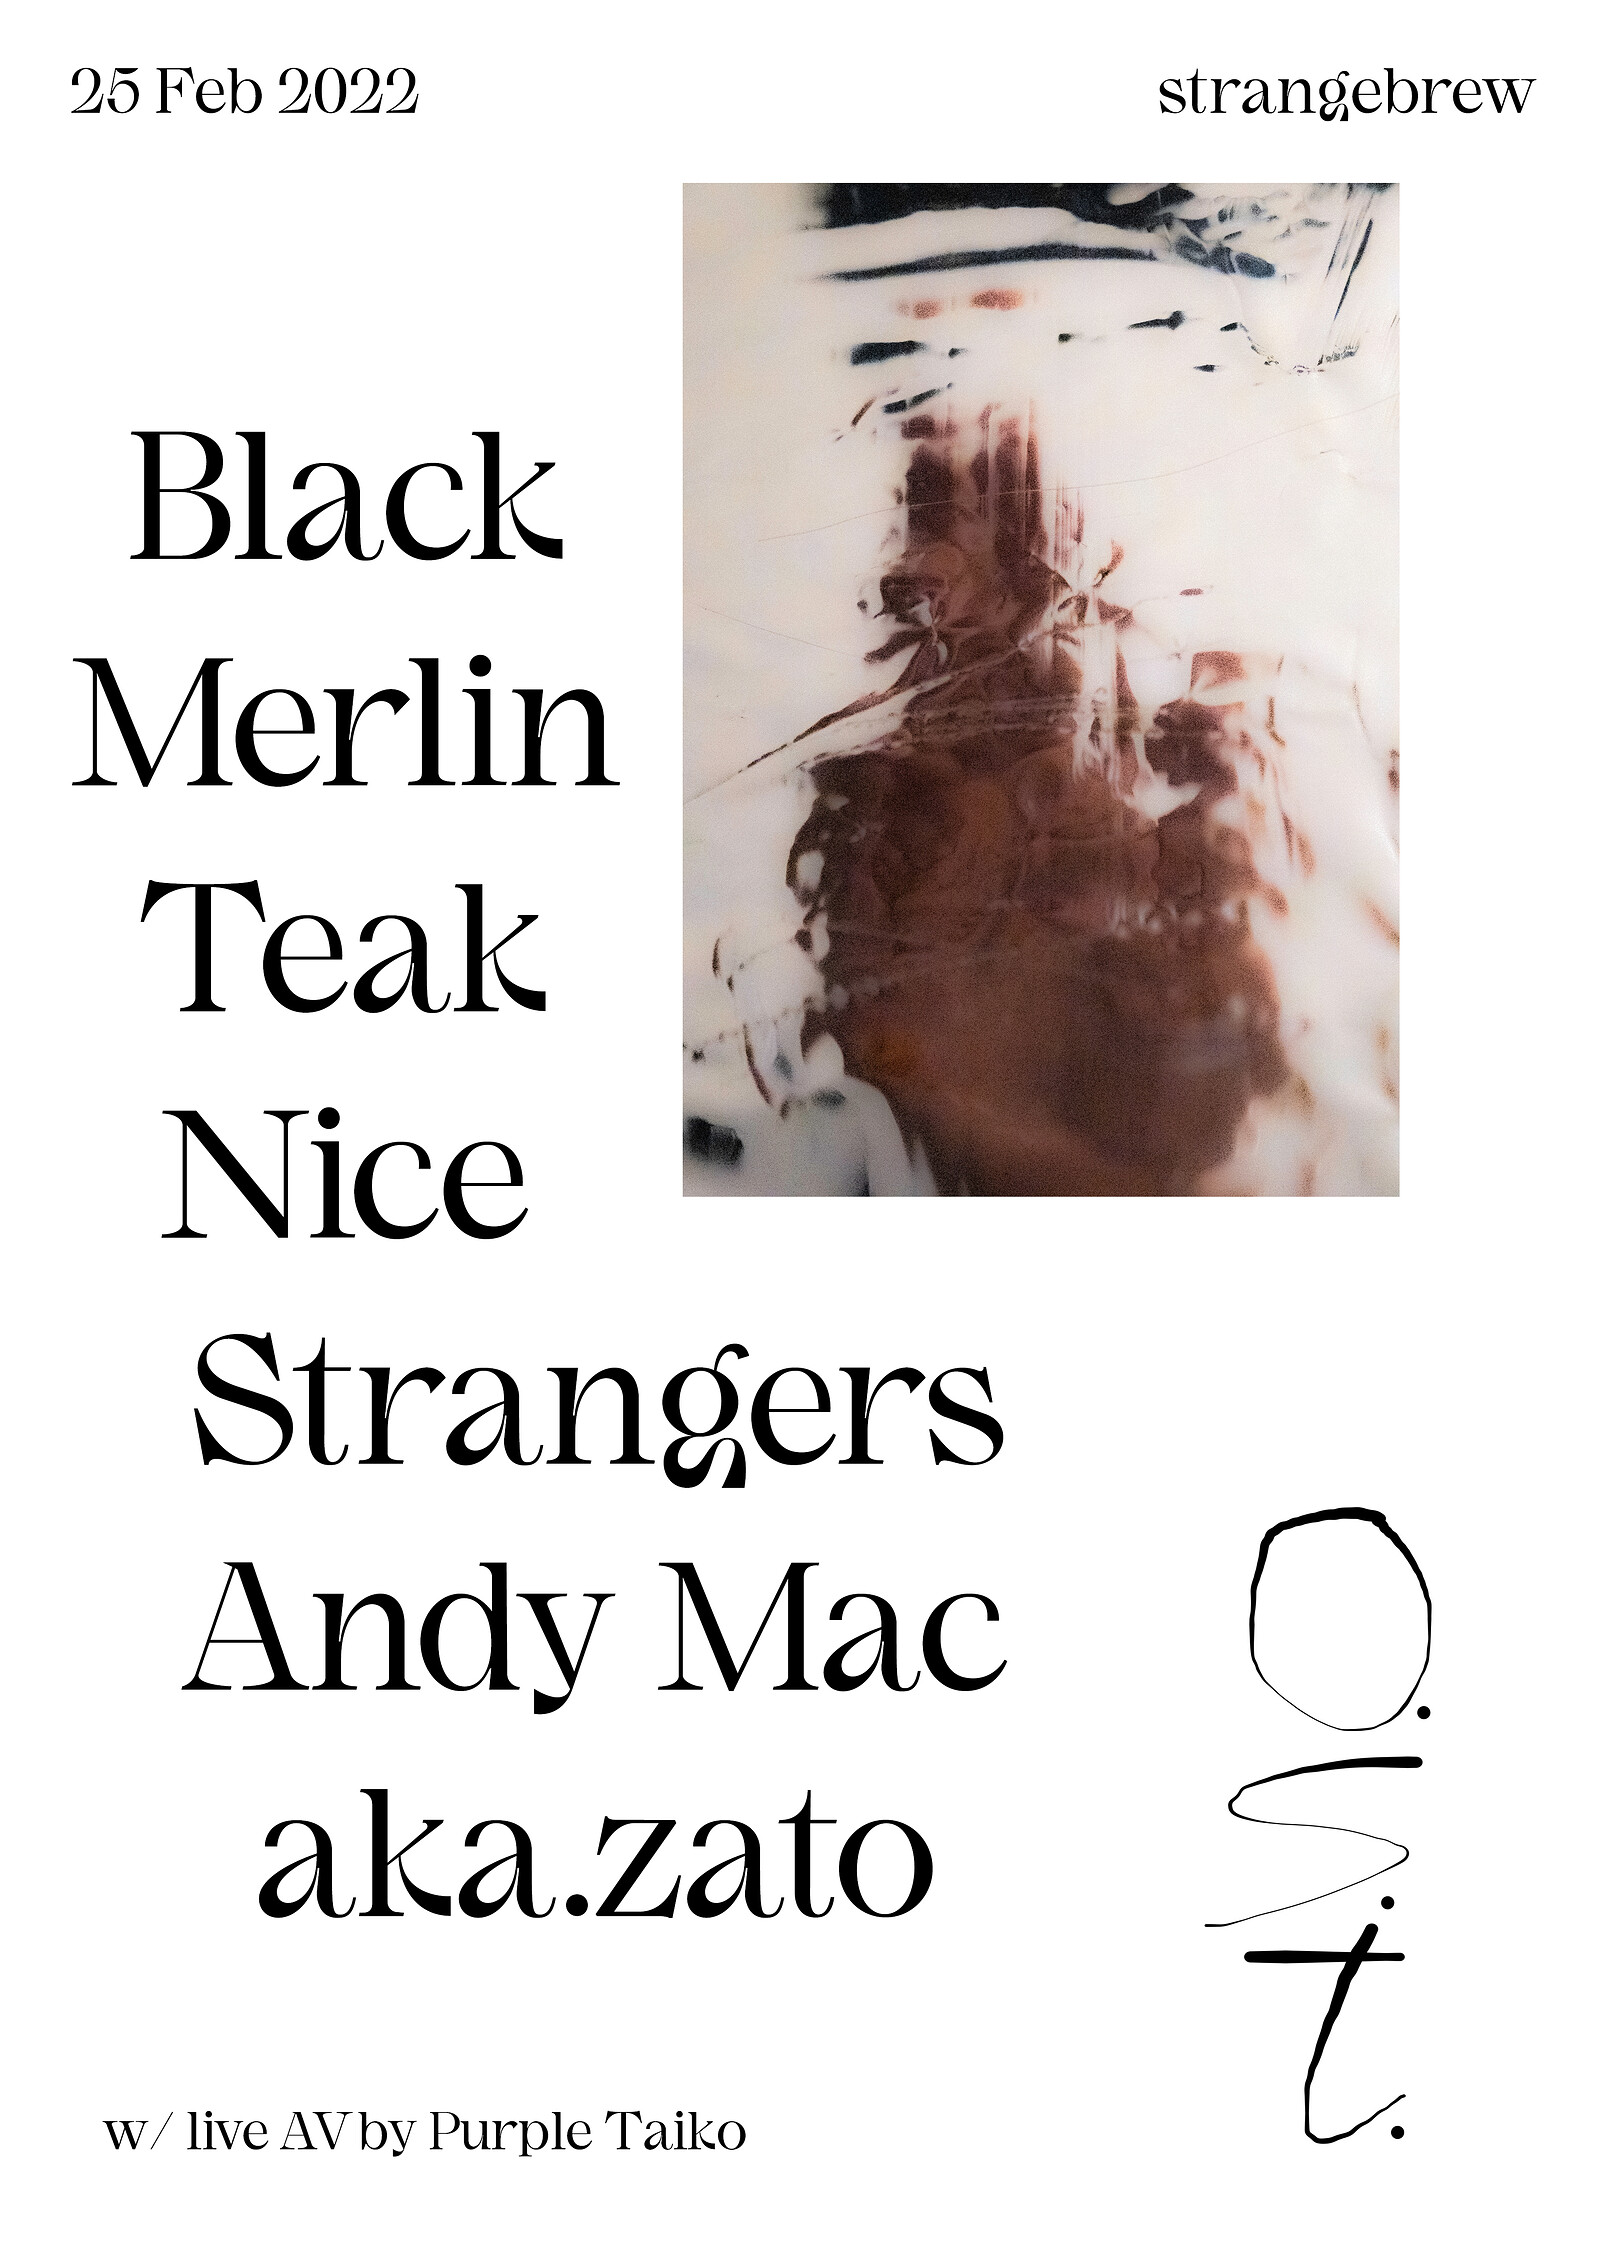 O.S.T. Black Merlin, Teak, Nice Strangers +++ at Strange Brew